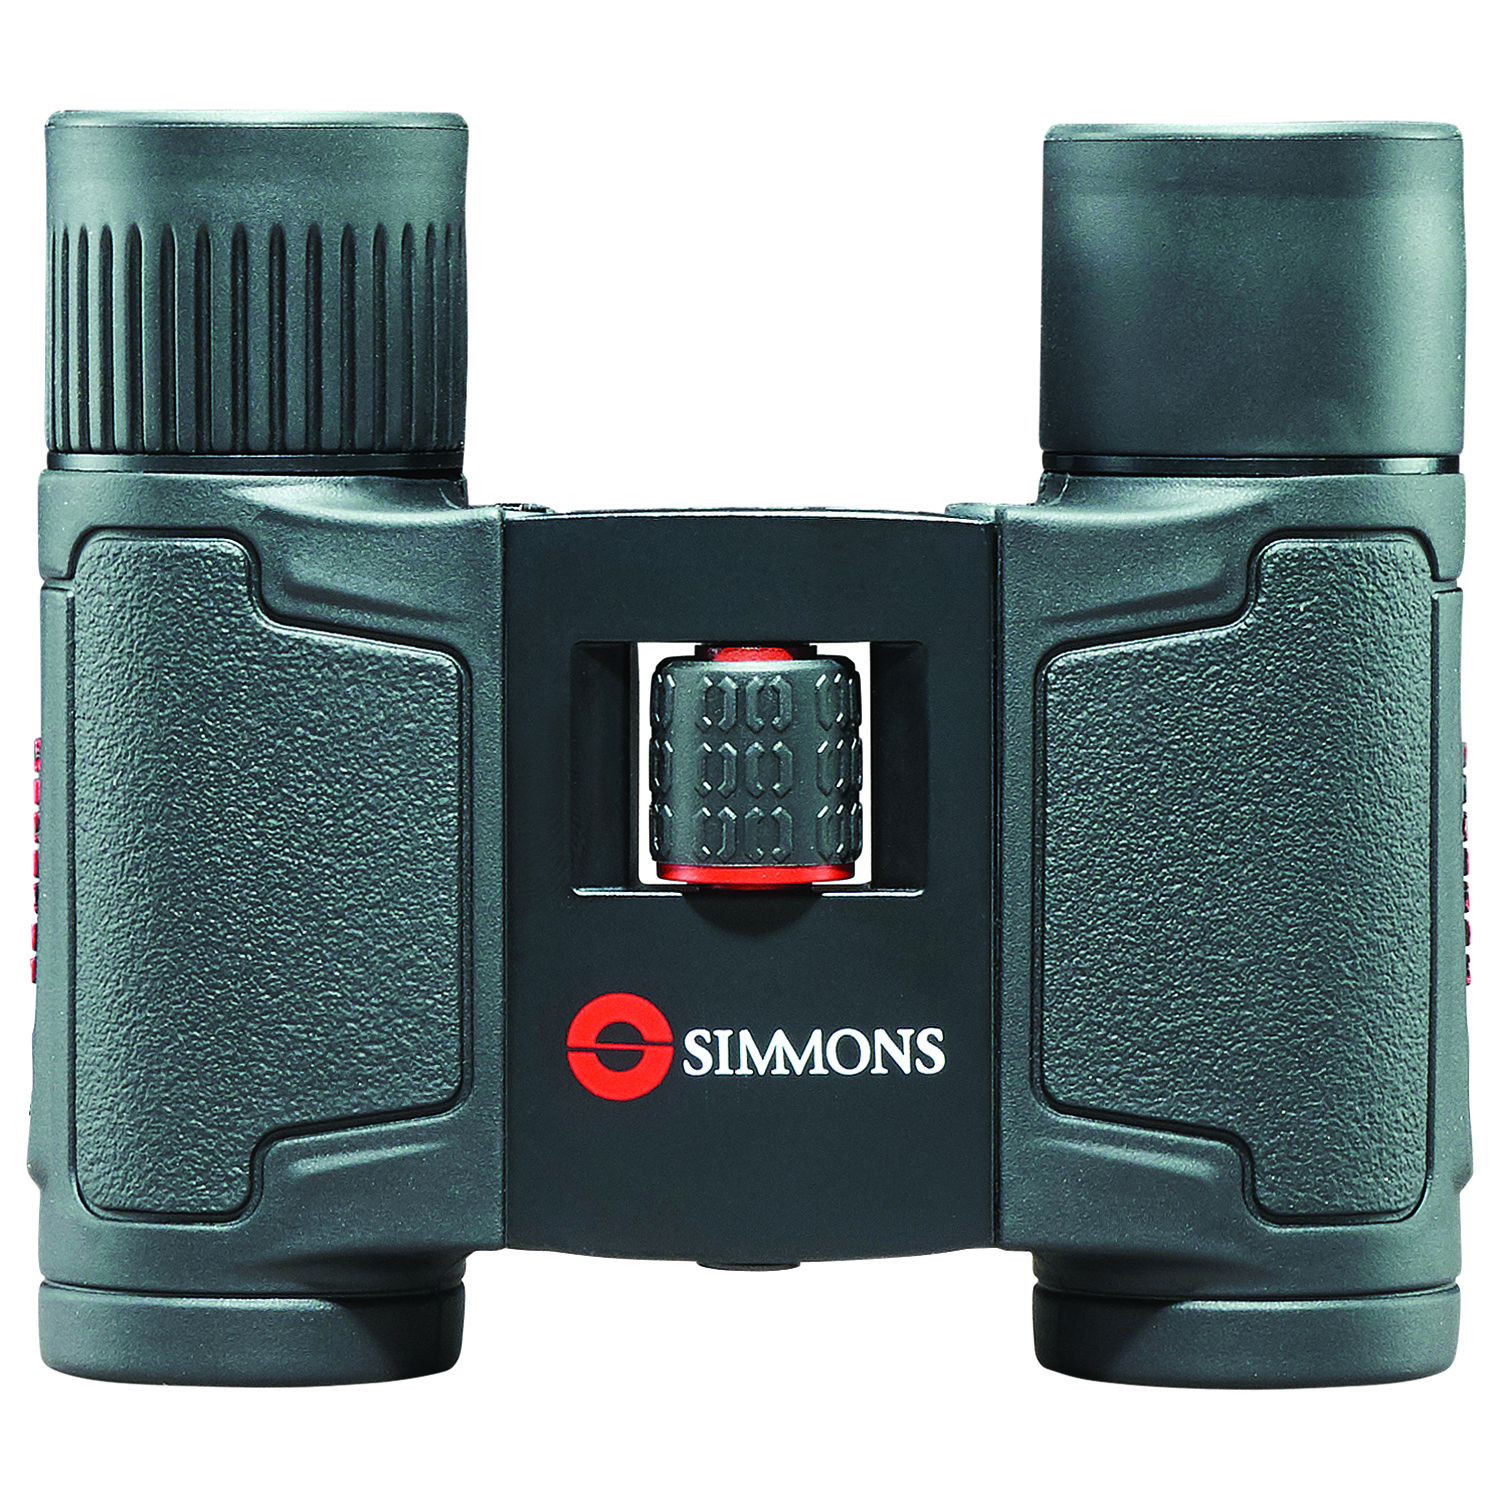 Simmons 8971021R Venture Binocular 10X21 Black Frp, FMC, Strap, Case